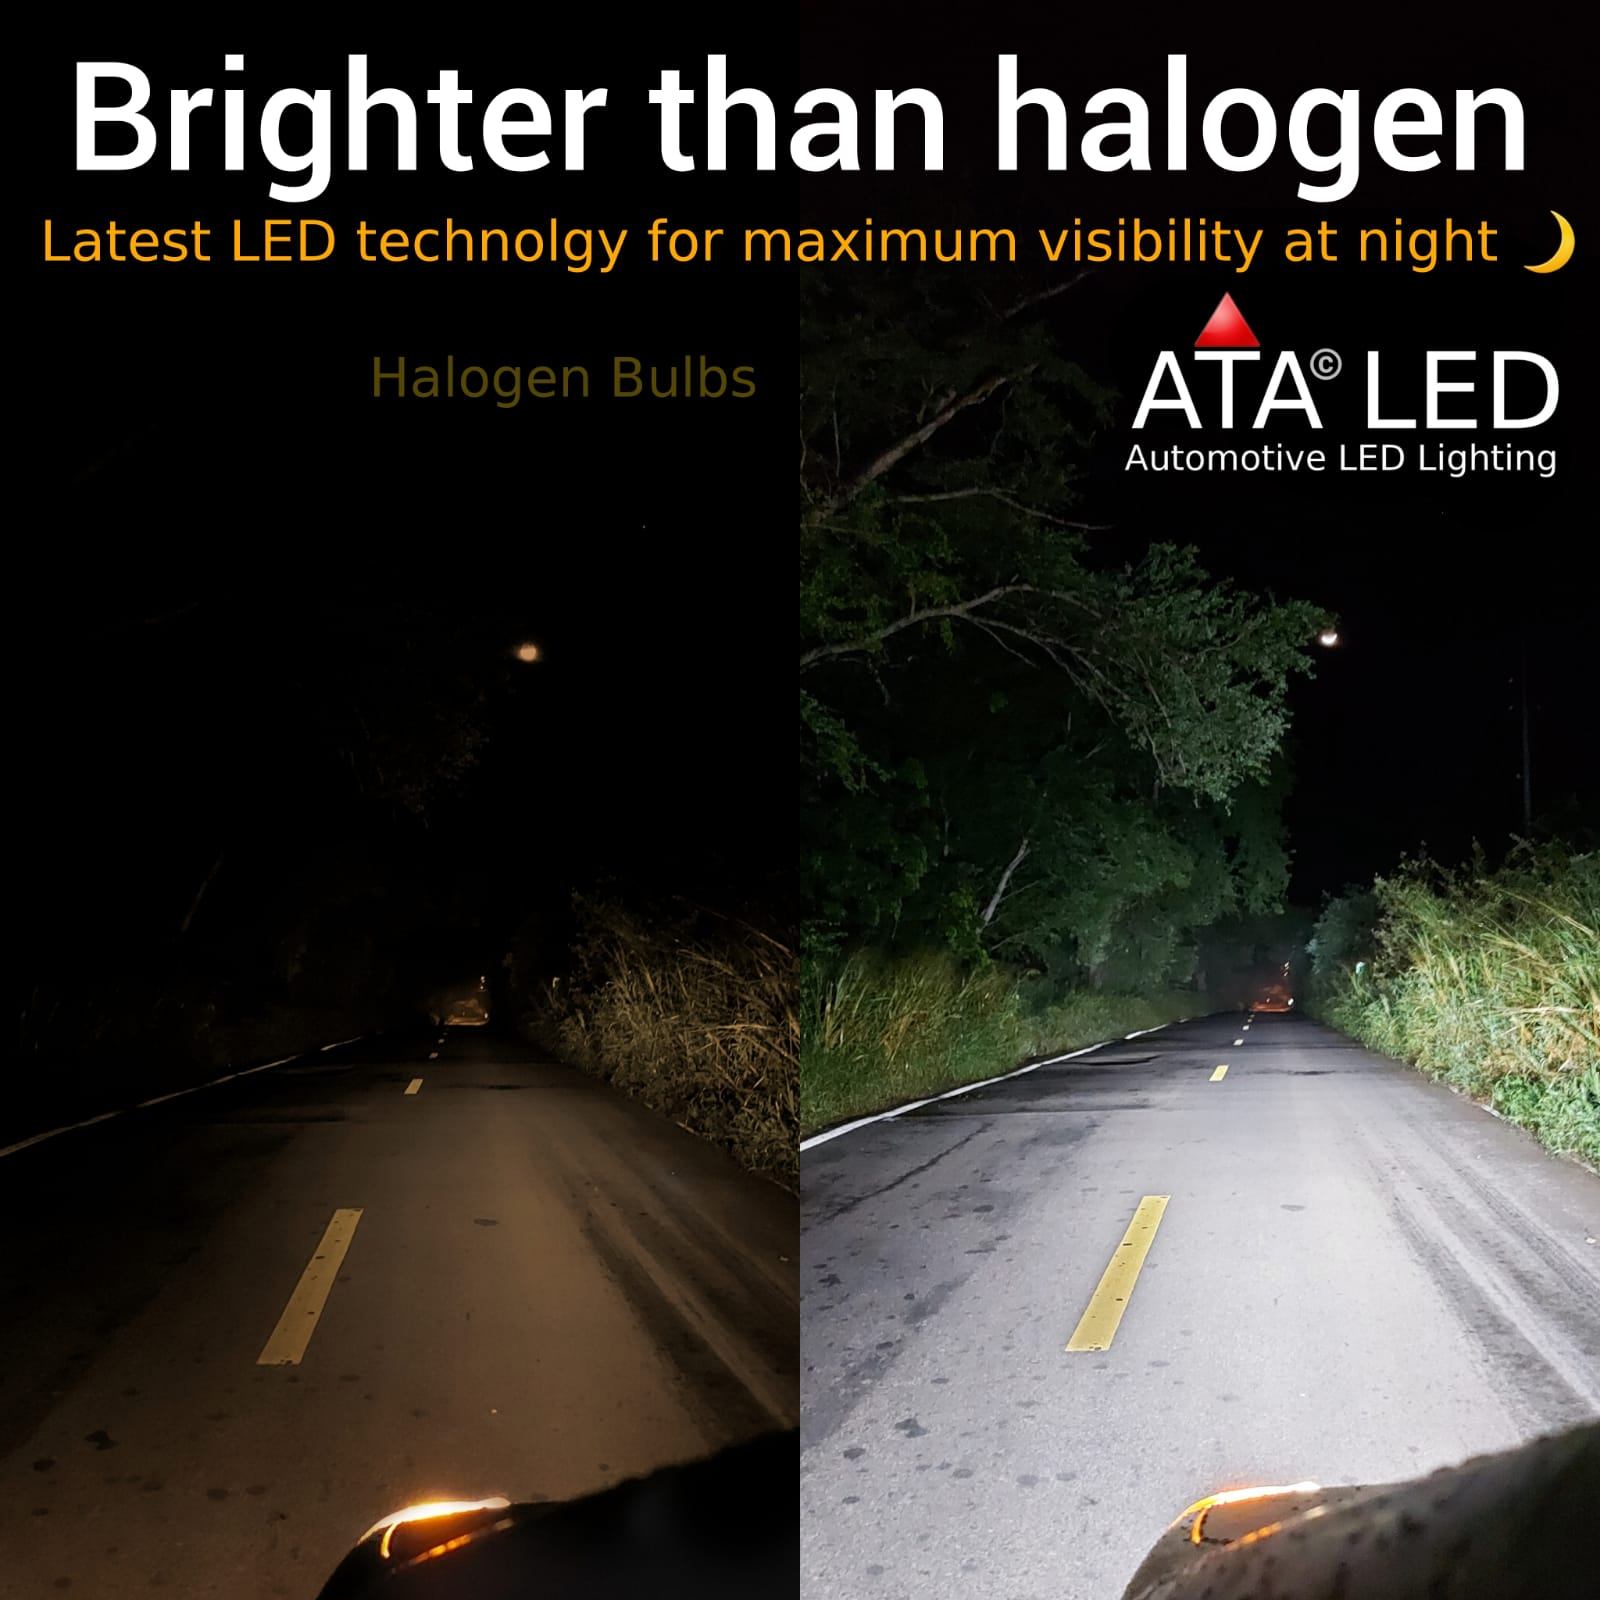 26000 Lumens Brighter than halogen Latest LED technology for maximum visibility at night Halogen bulbs VS ATA LED 